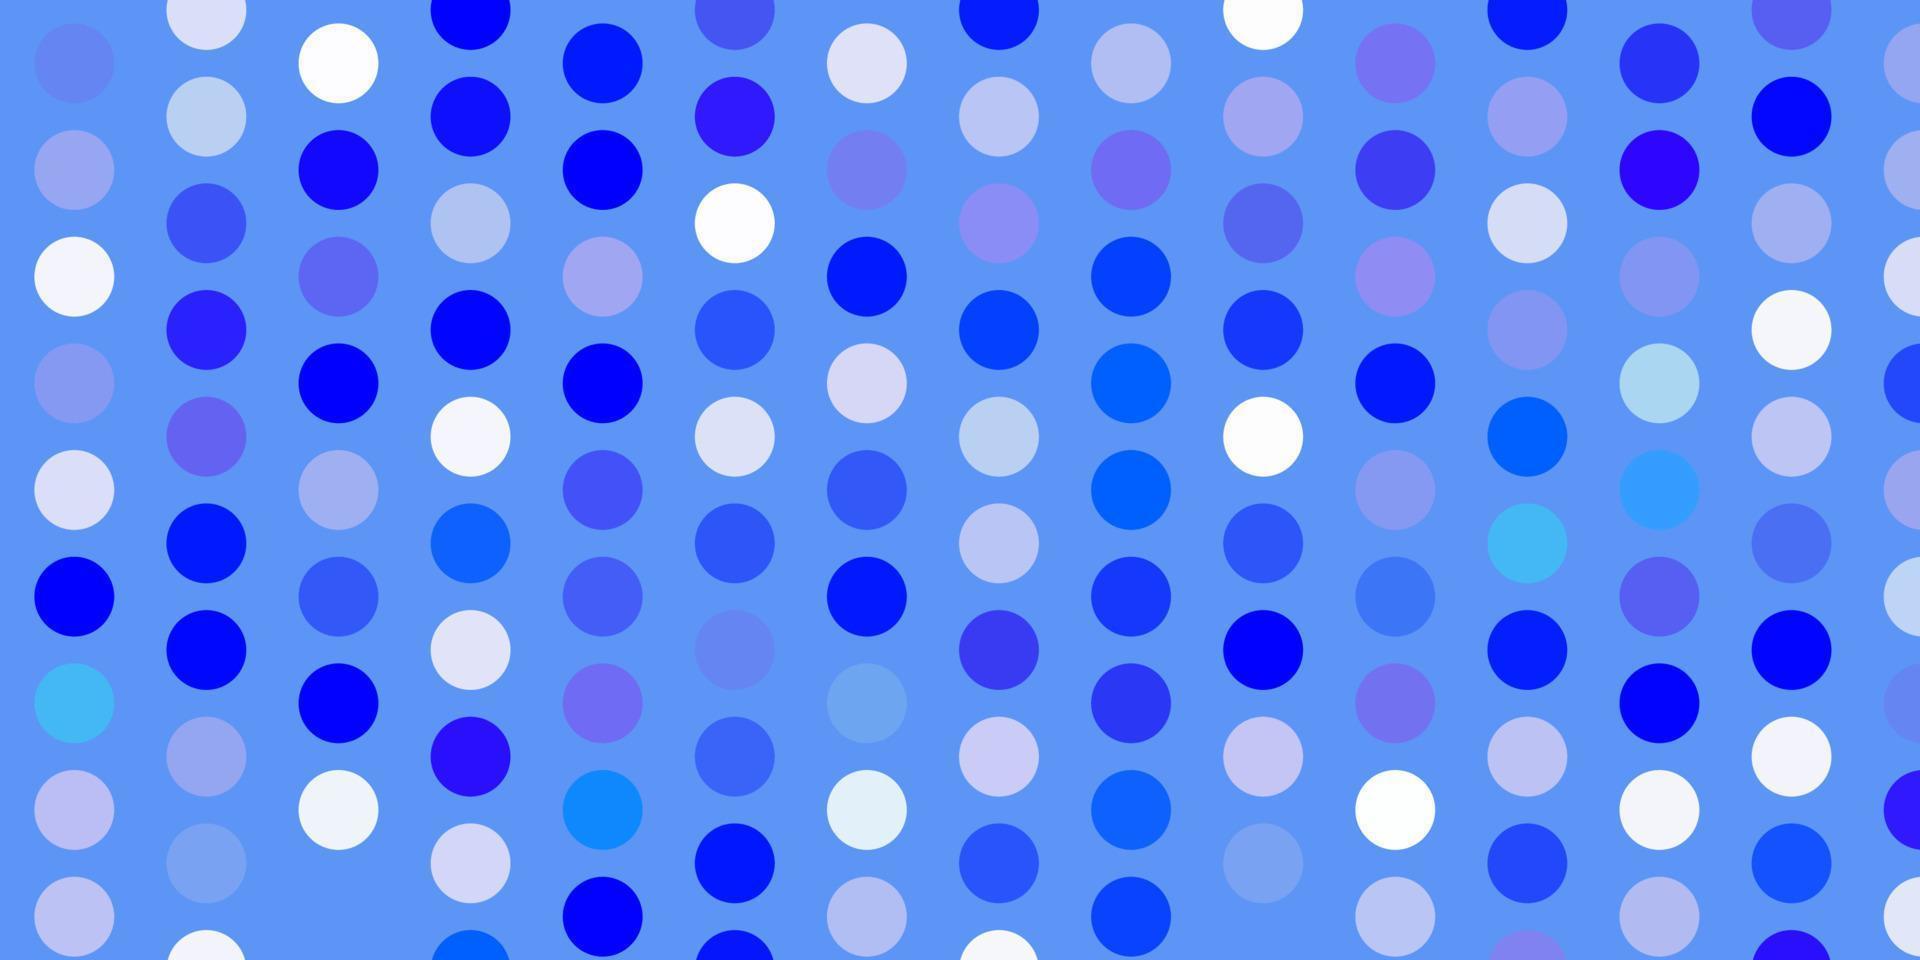 diseño de vector azul claro con formas circulares.